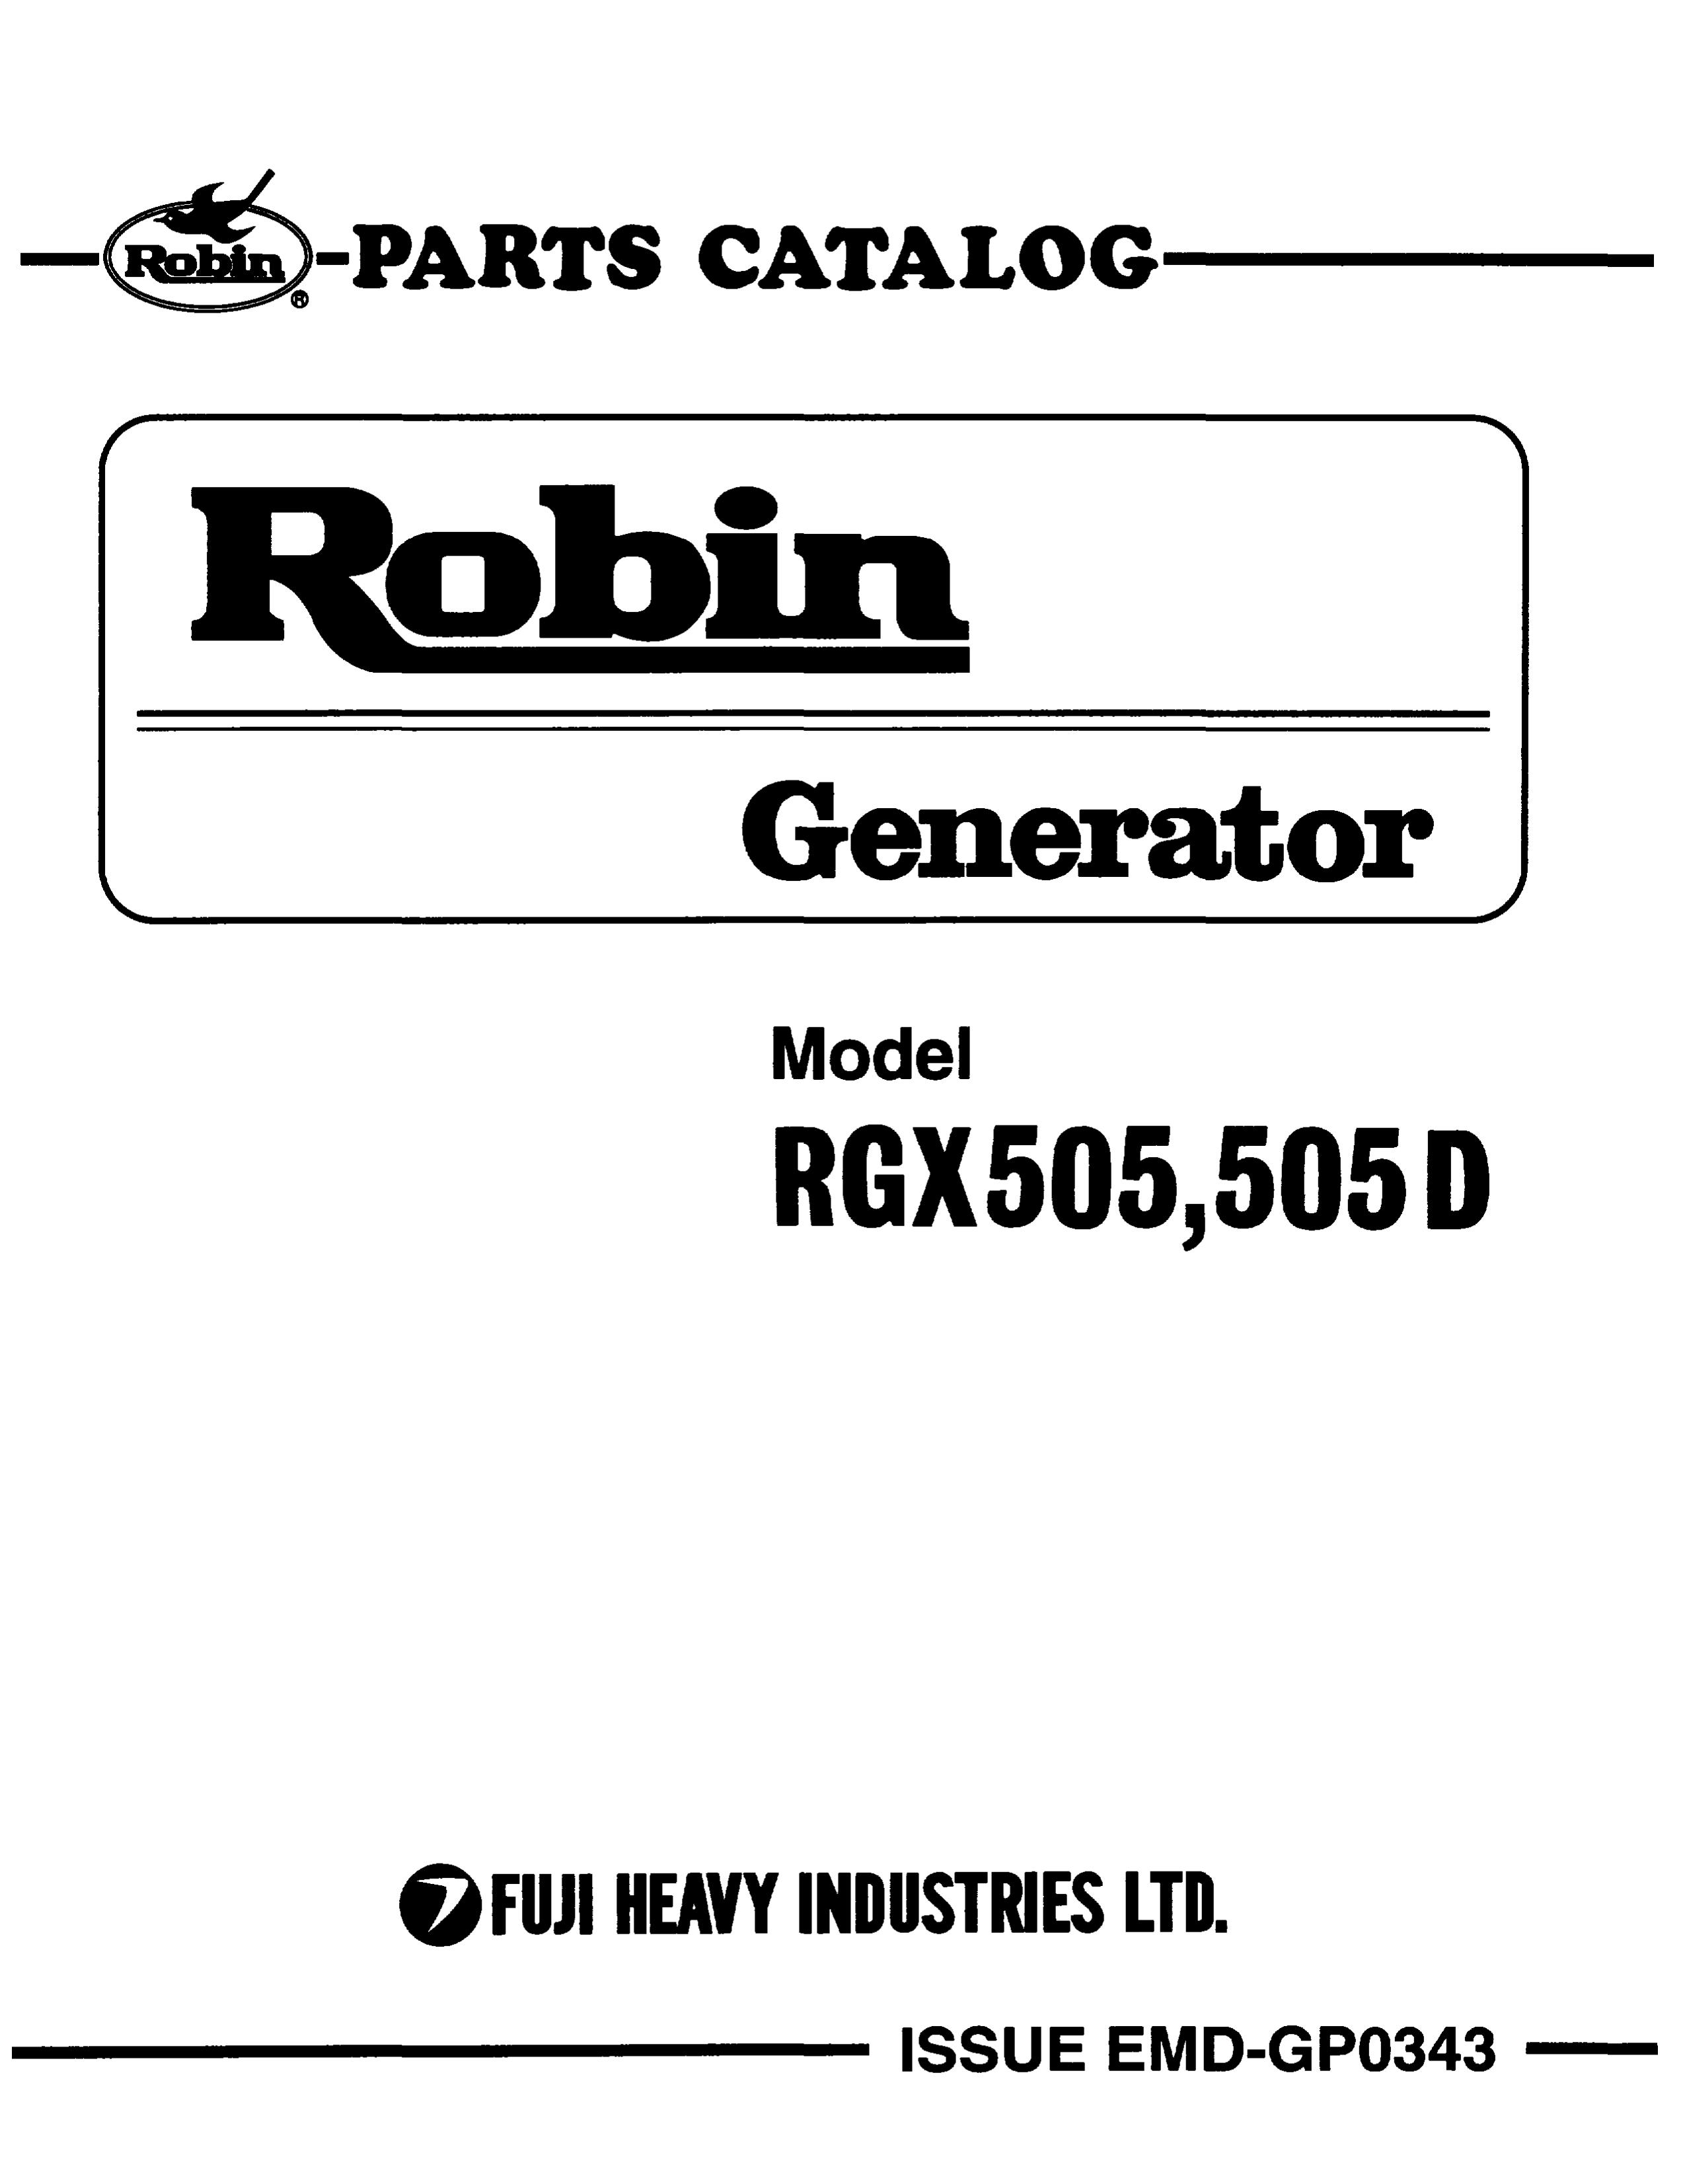 Subaru Robin Power Products 505D Portable Generator User Manual